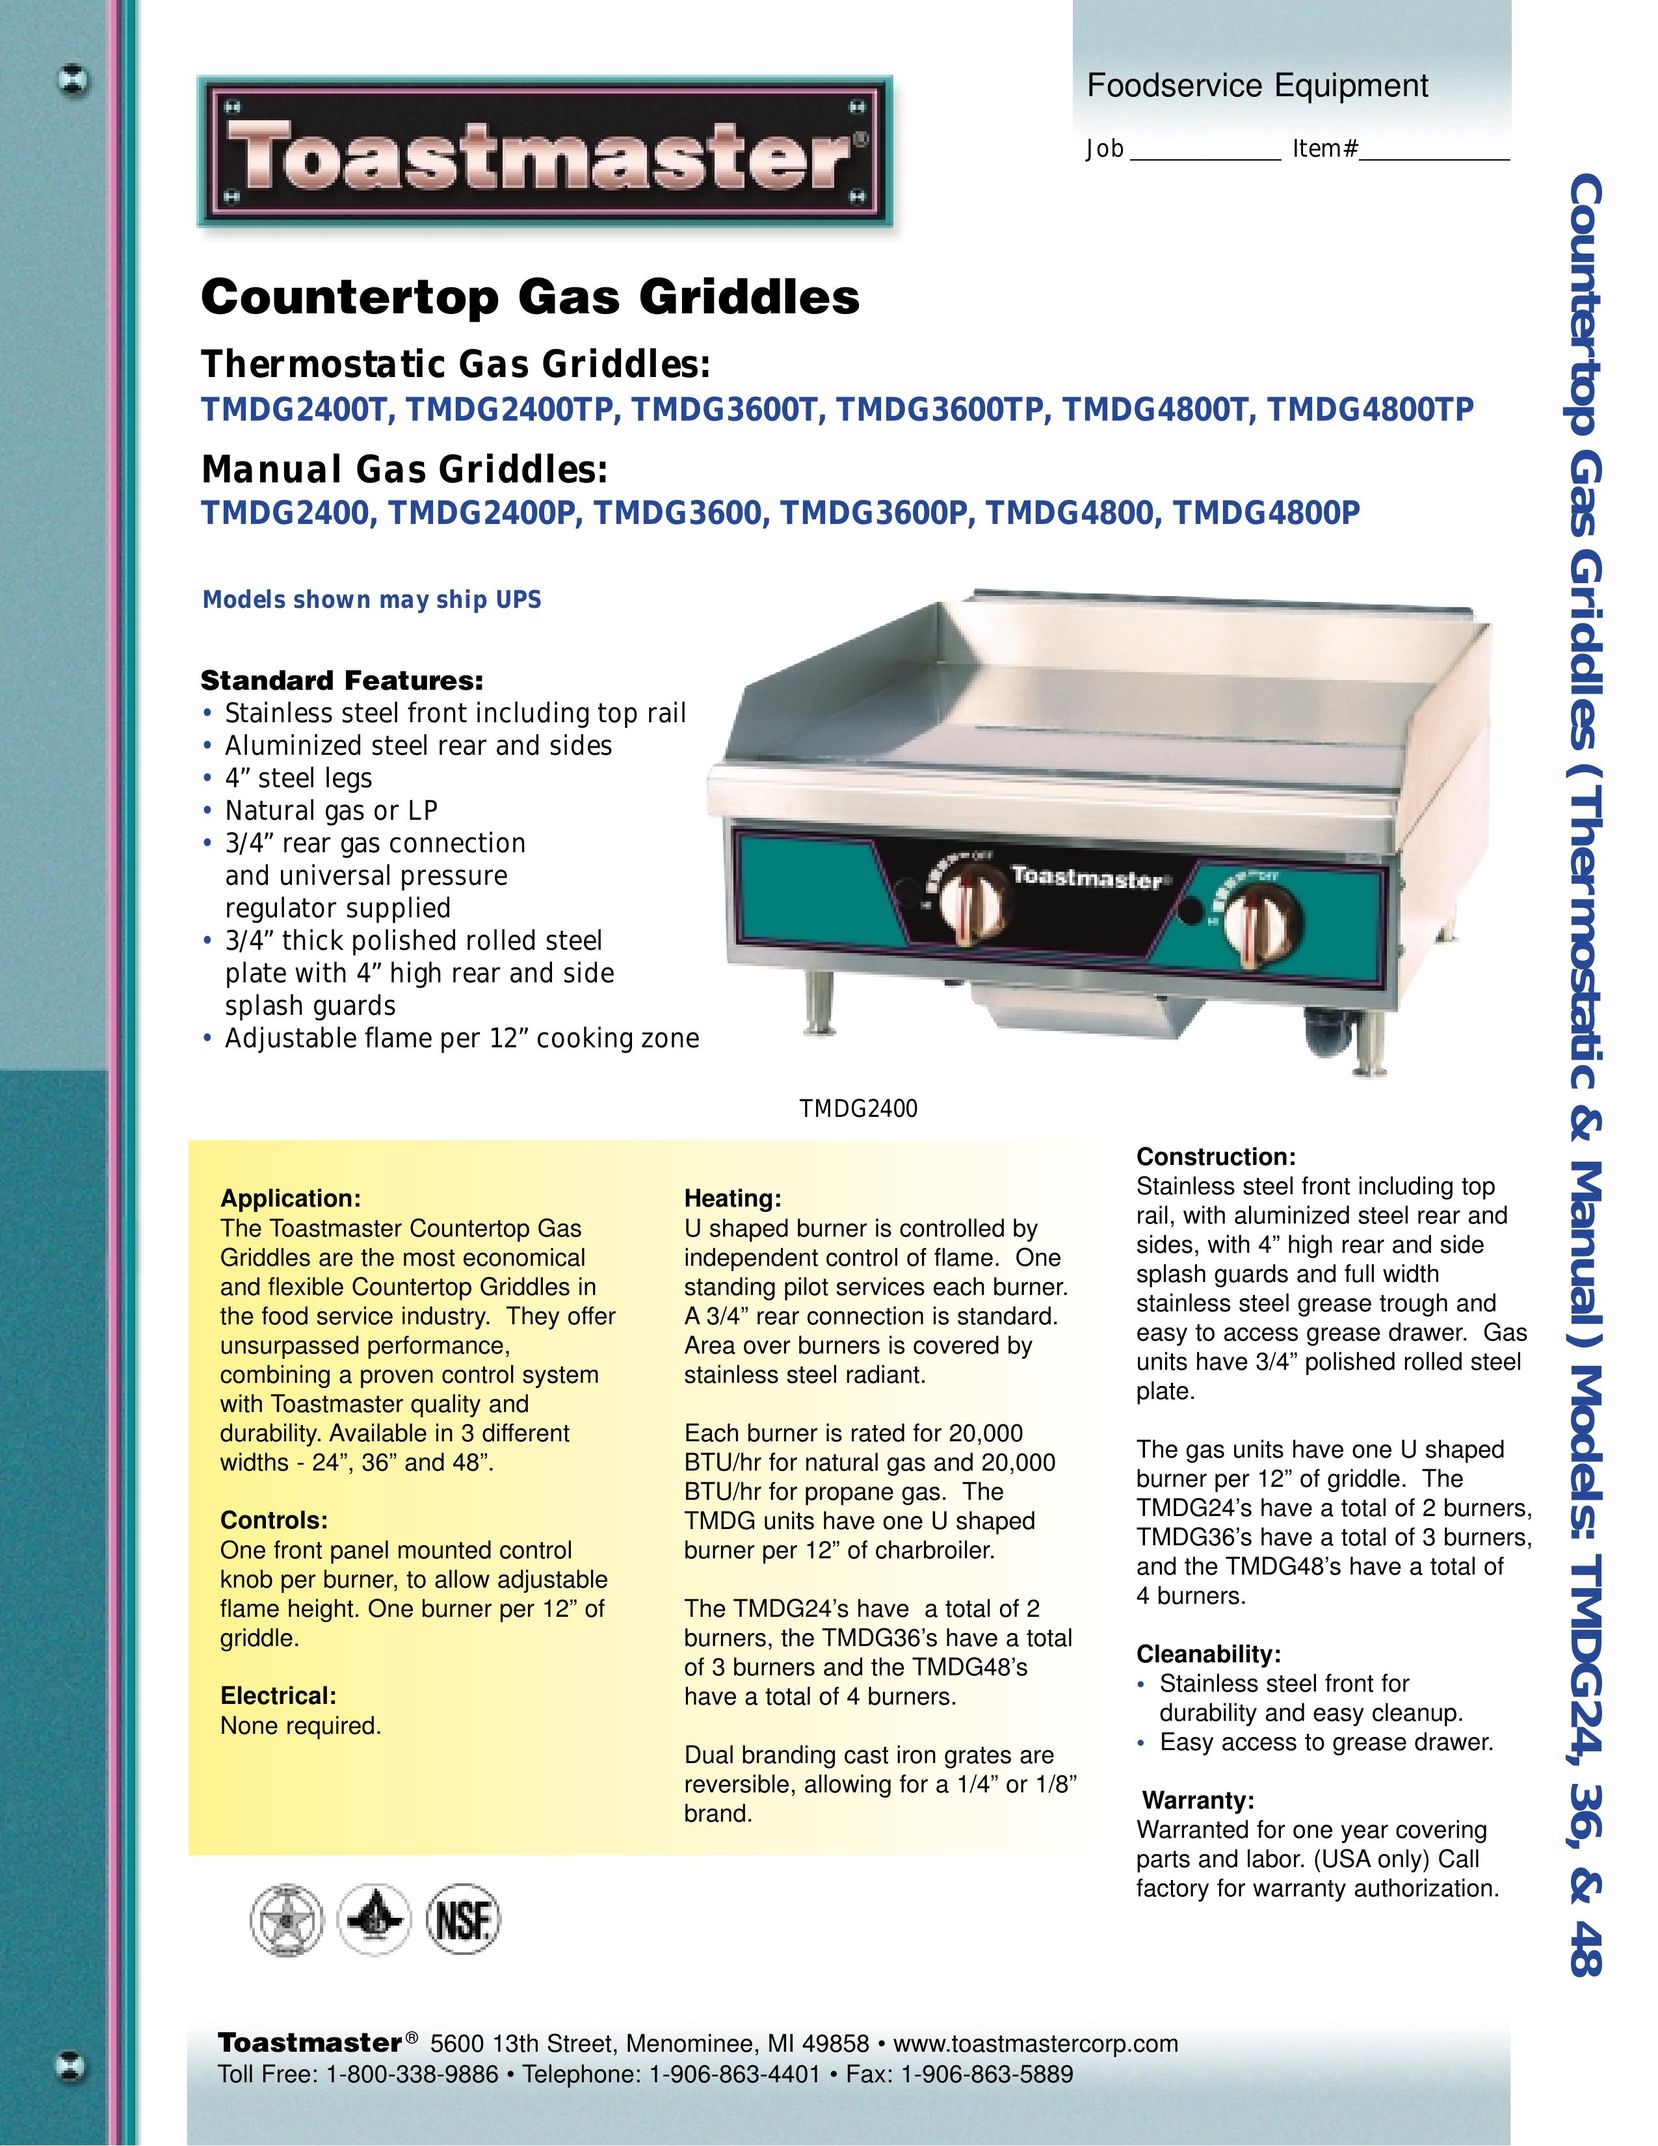 Toastmaster TMDG3600P Griddle User Manual